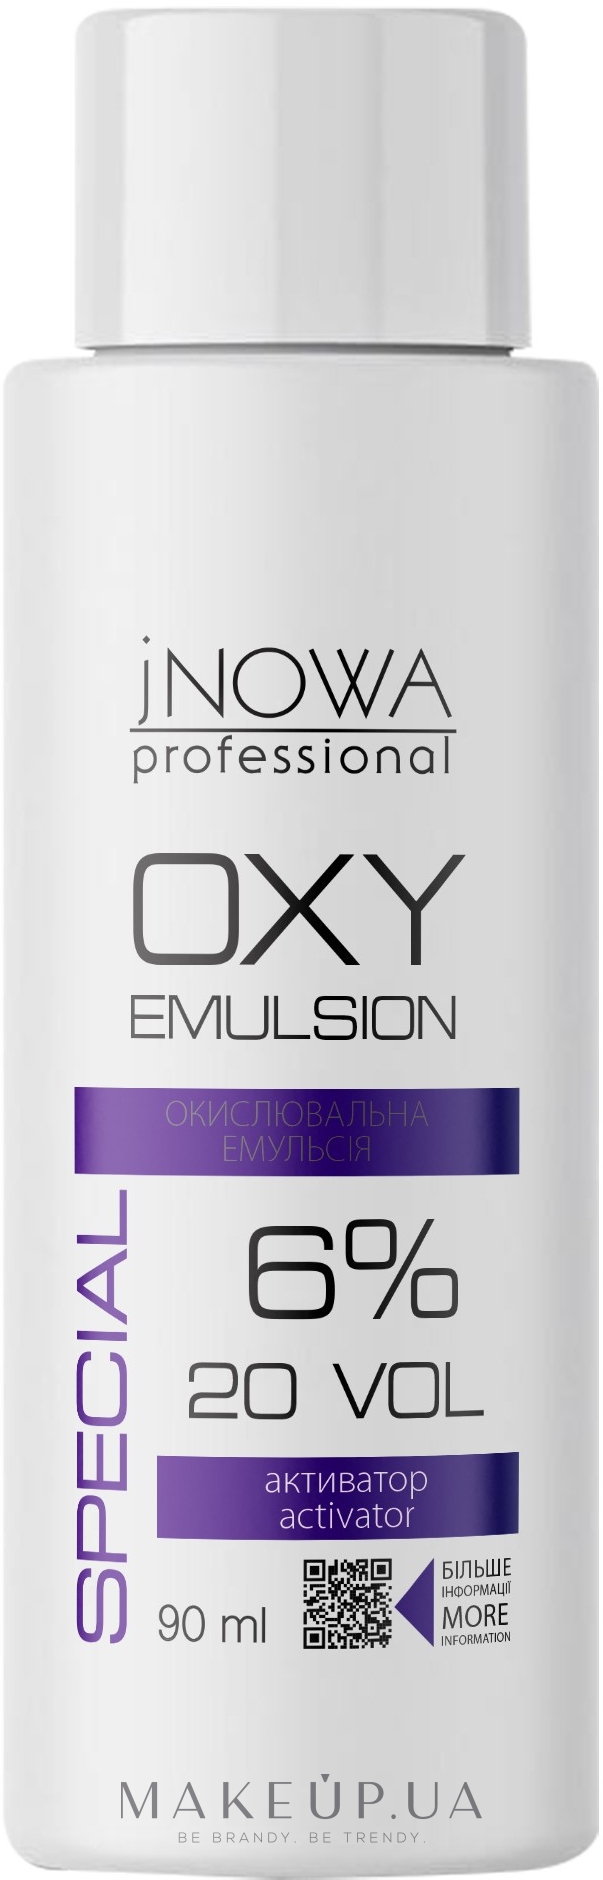 Окислительная эмульсия, 6 % - jNOWA Professional OXY 6 % (20 vol) — фото 90ml